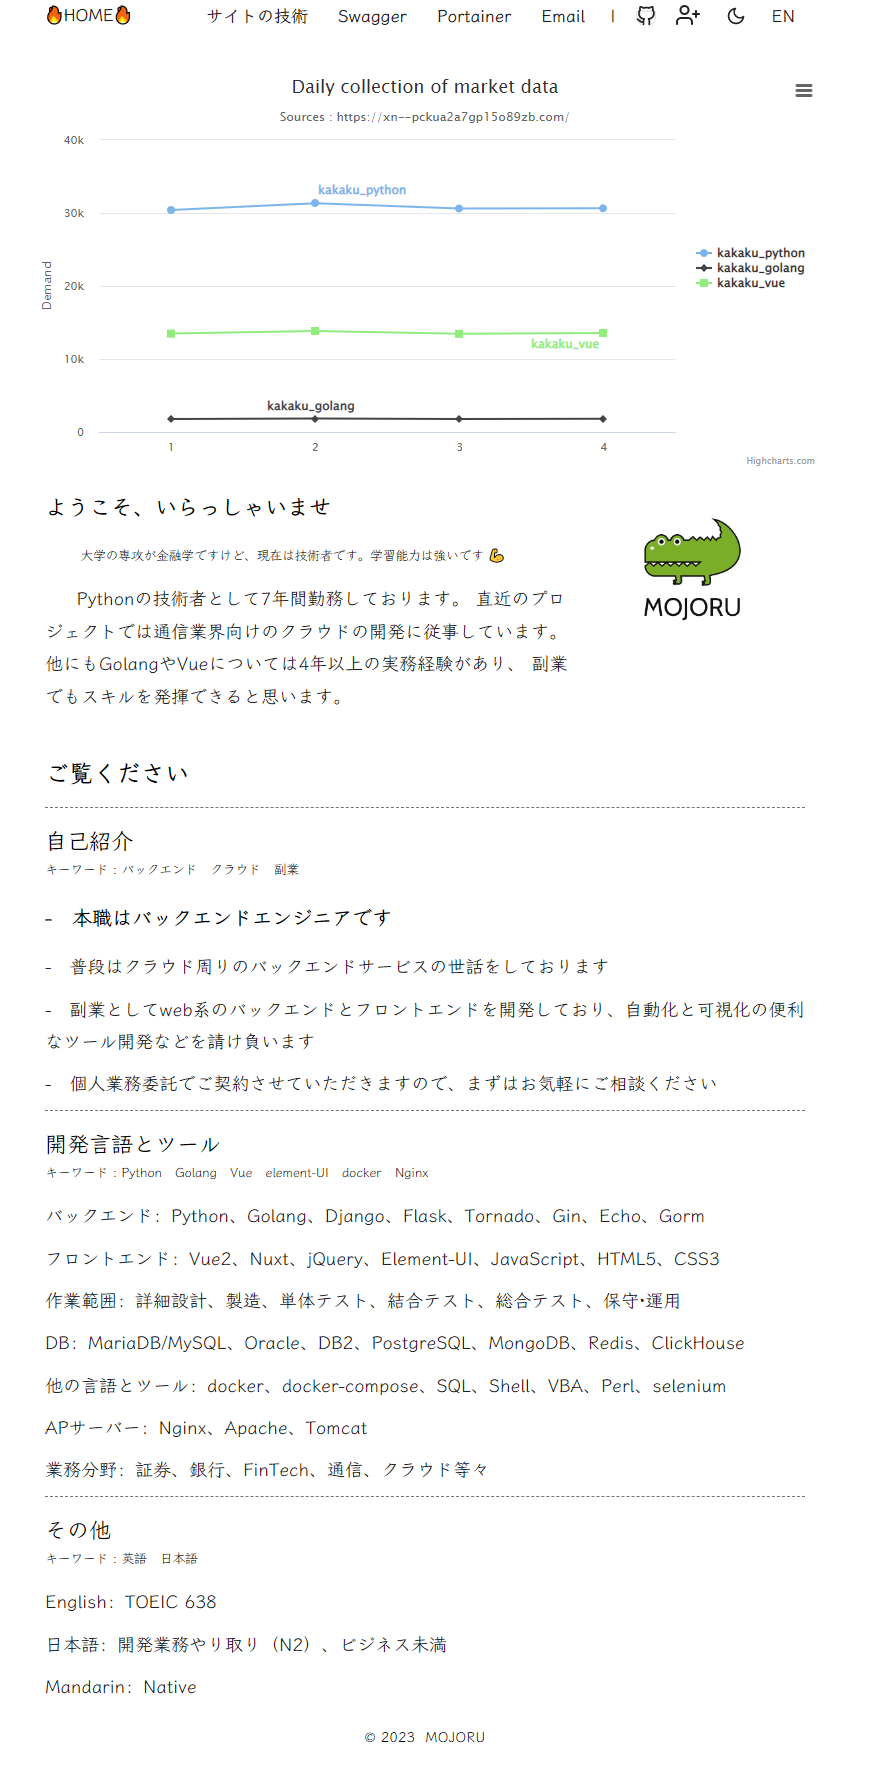 self-introduce-mojoru-jp.png